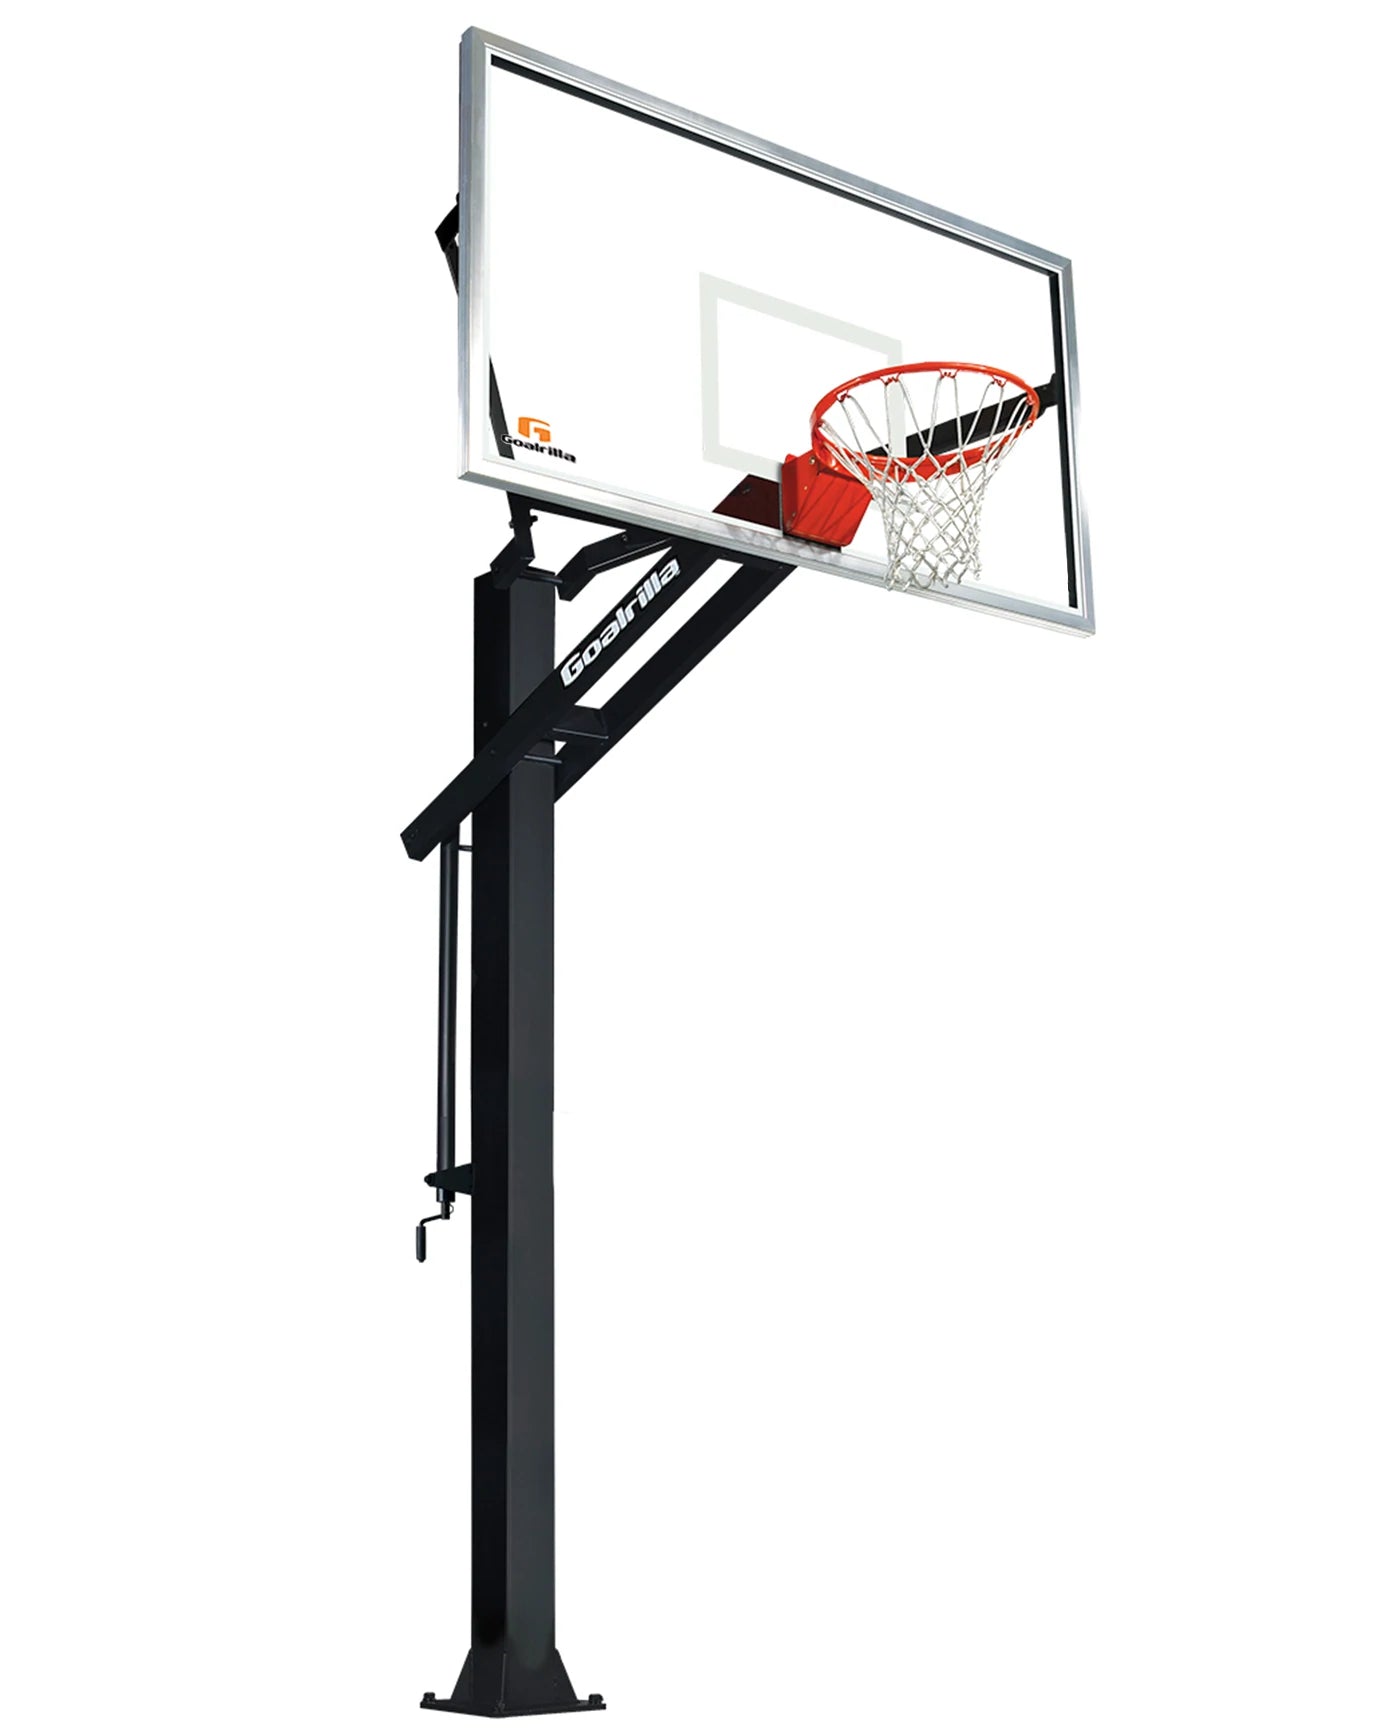 Goalrilla GS72C In-Ground Basketball Hoop System